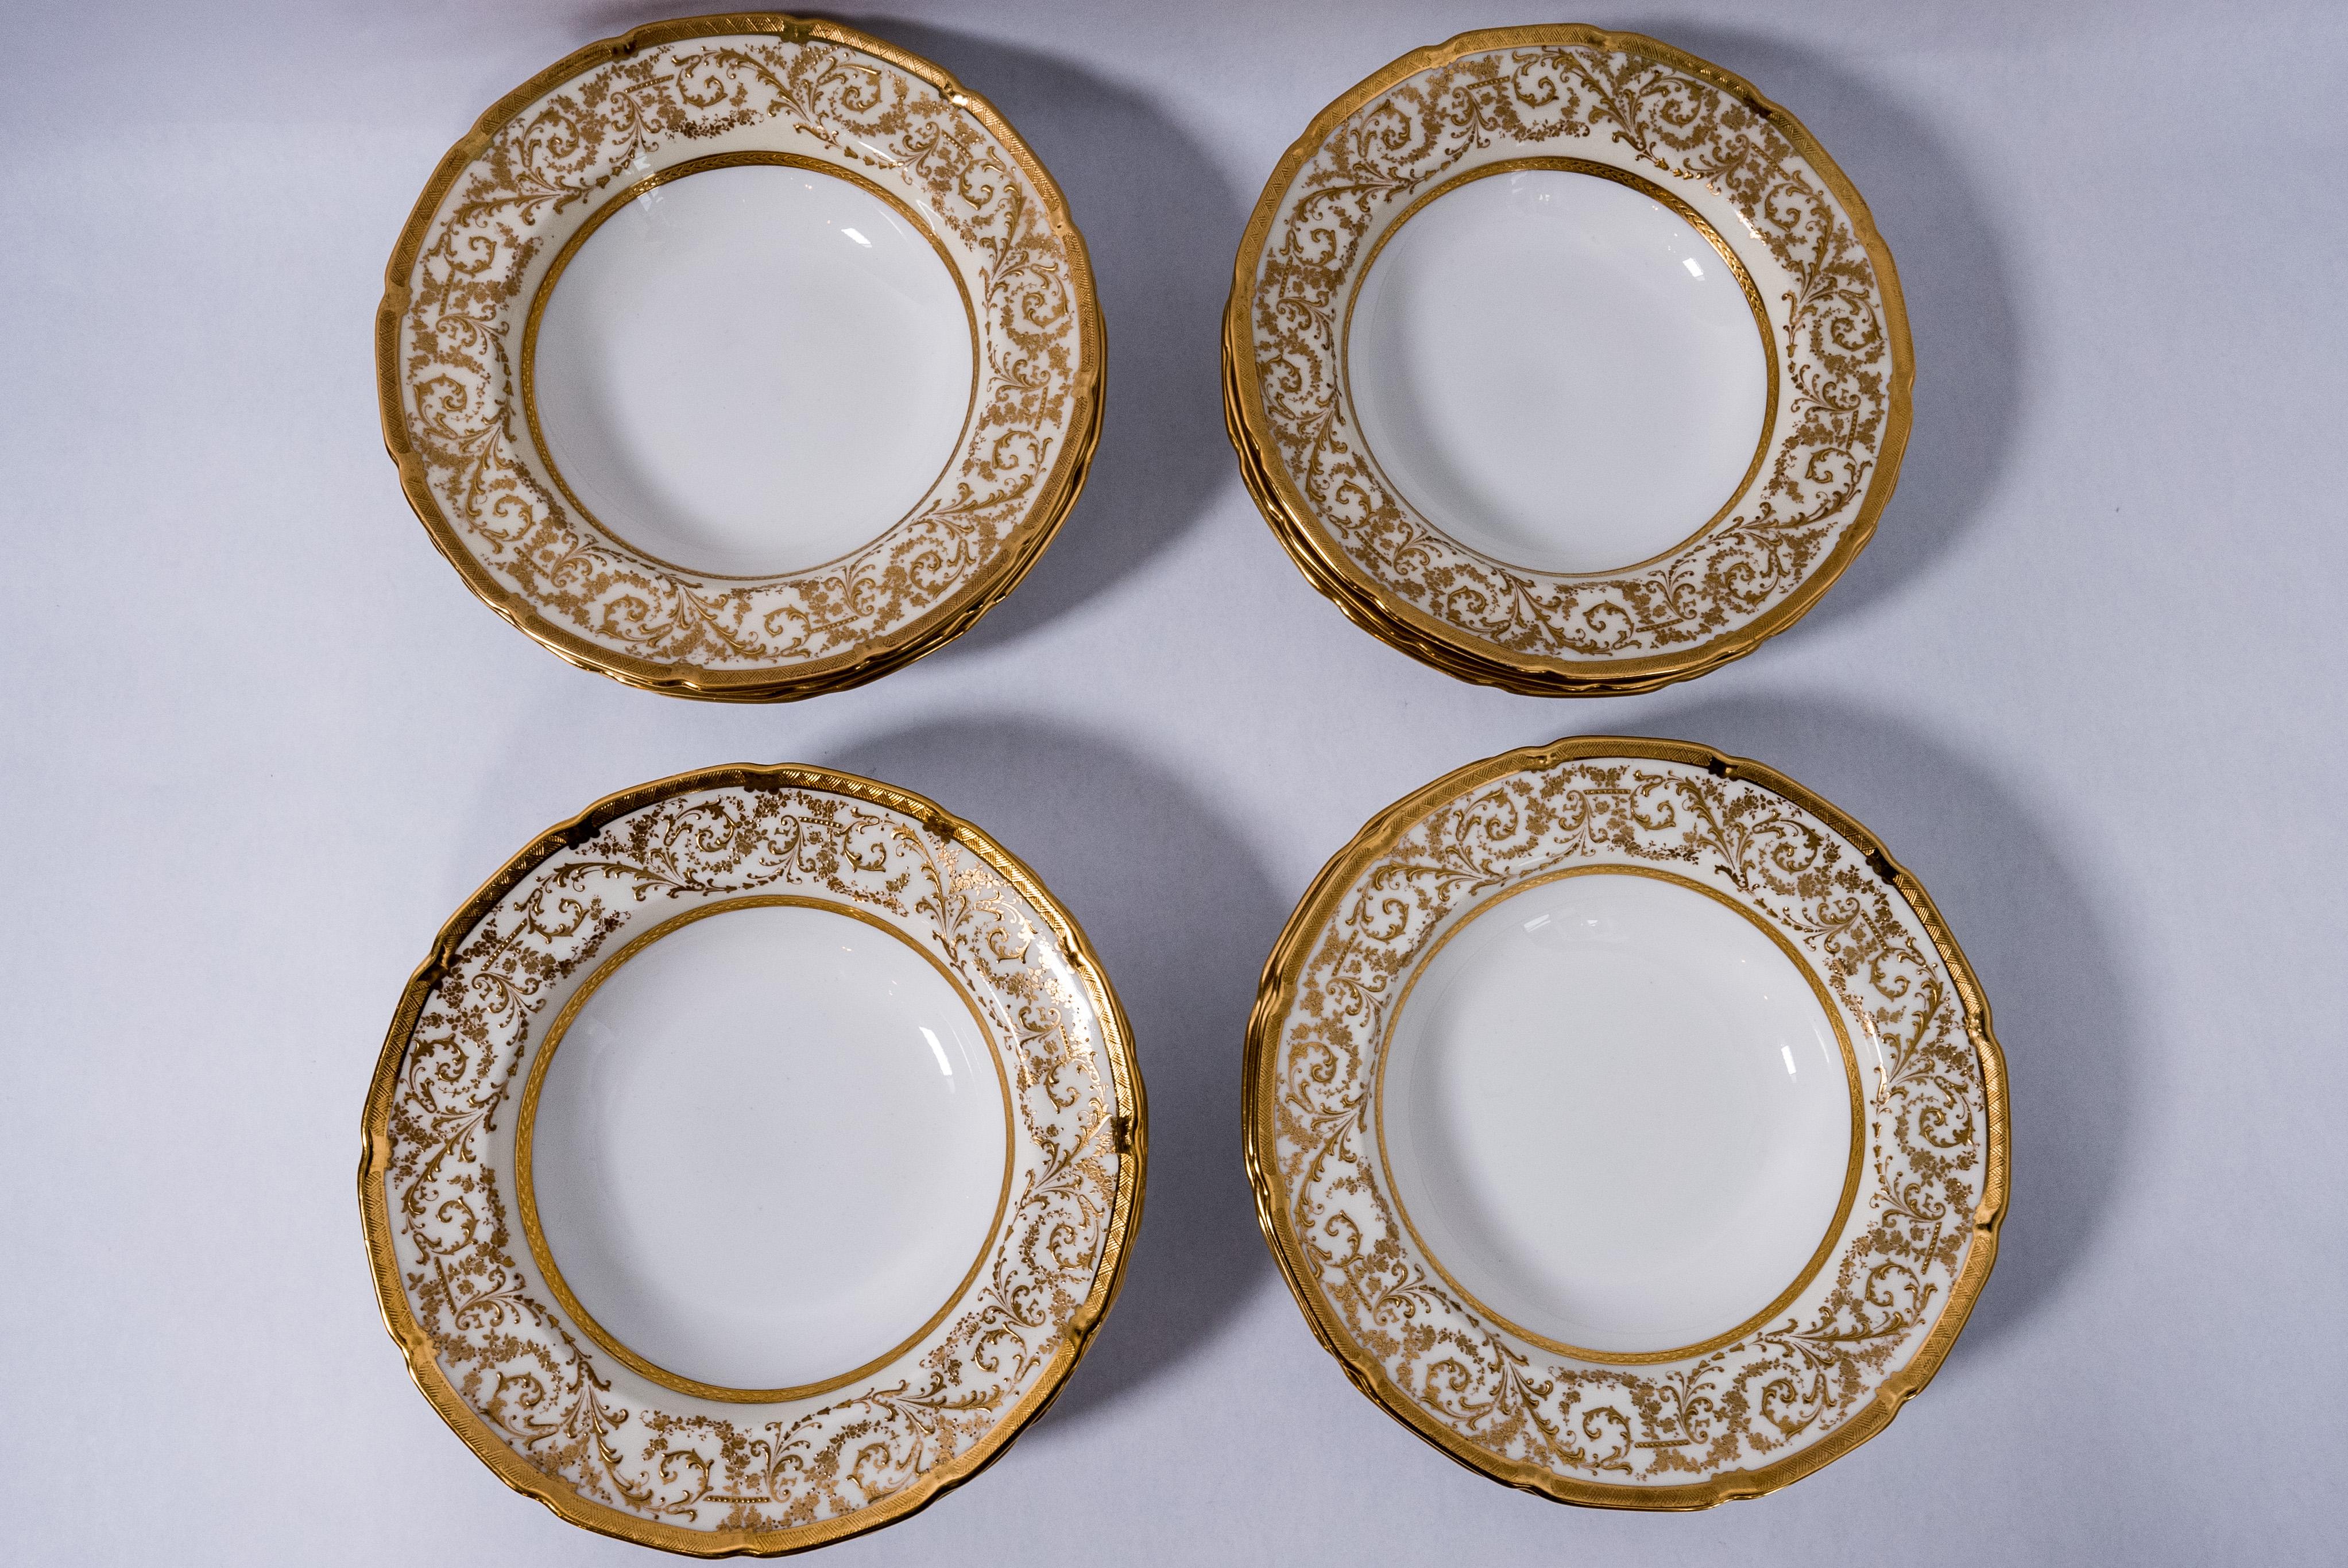 dinner plates with raised edges